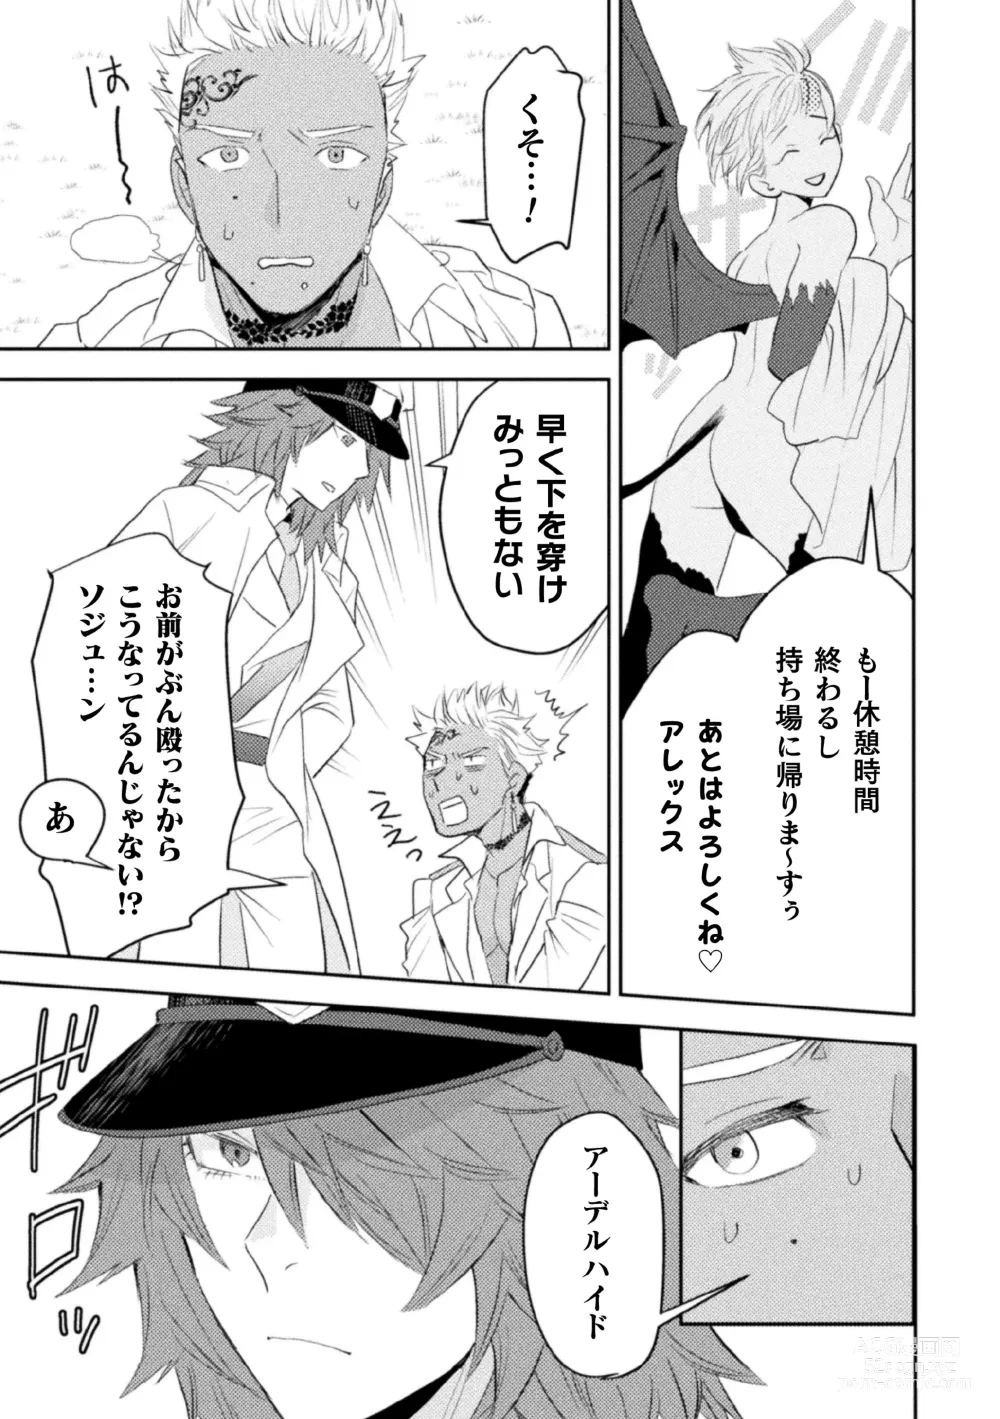 Page 9 of manga Zekkai Rougoku 4 Zekkai no Ori to Inma no Wana